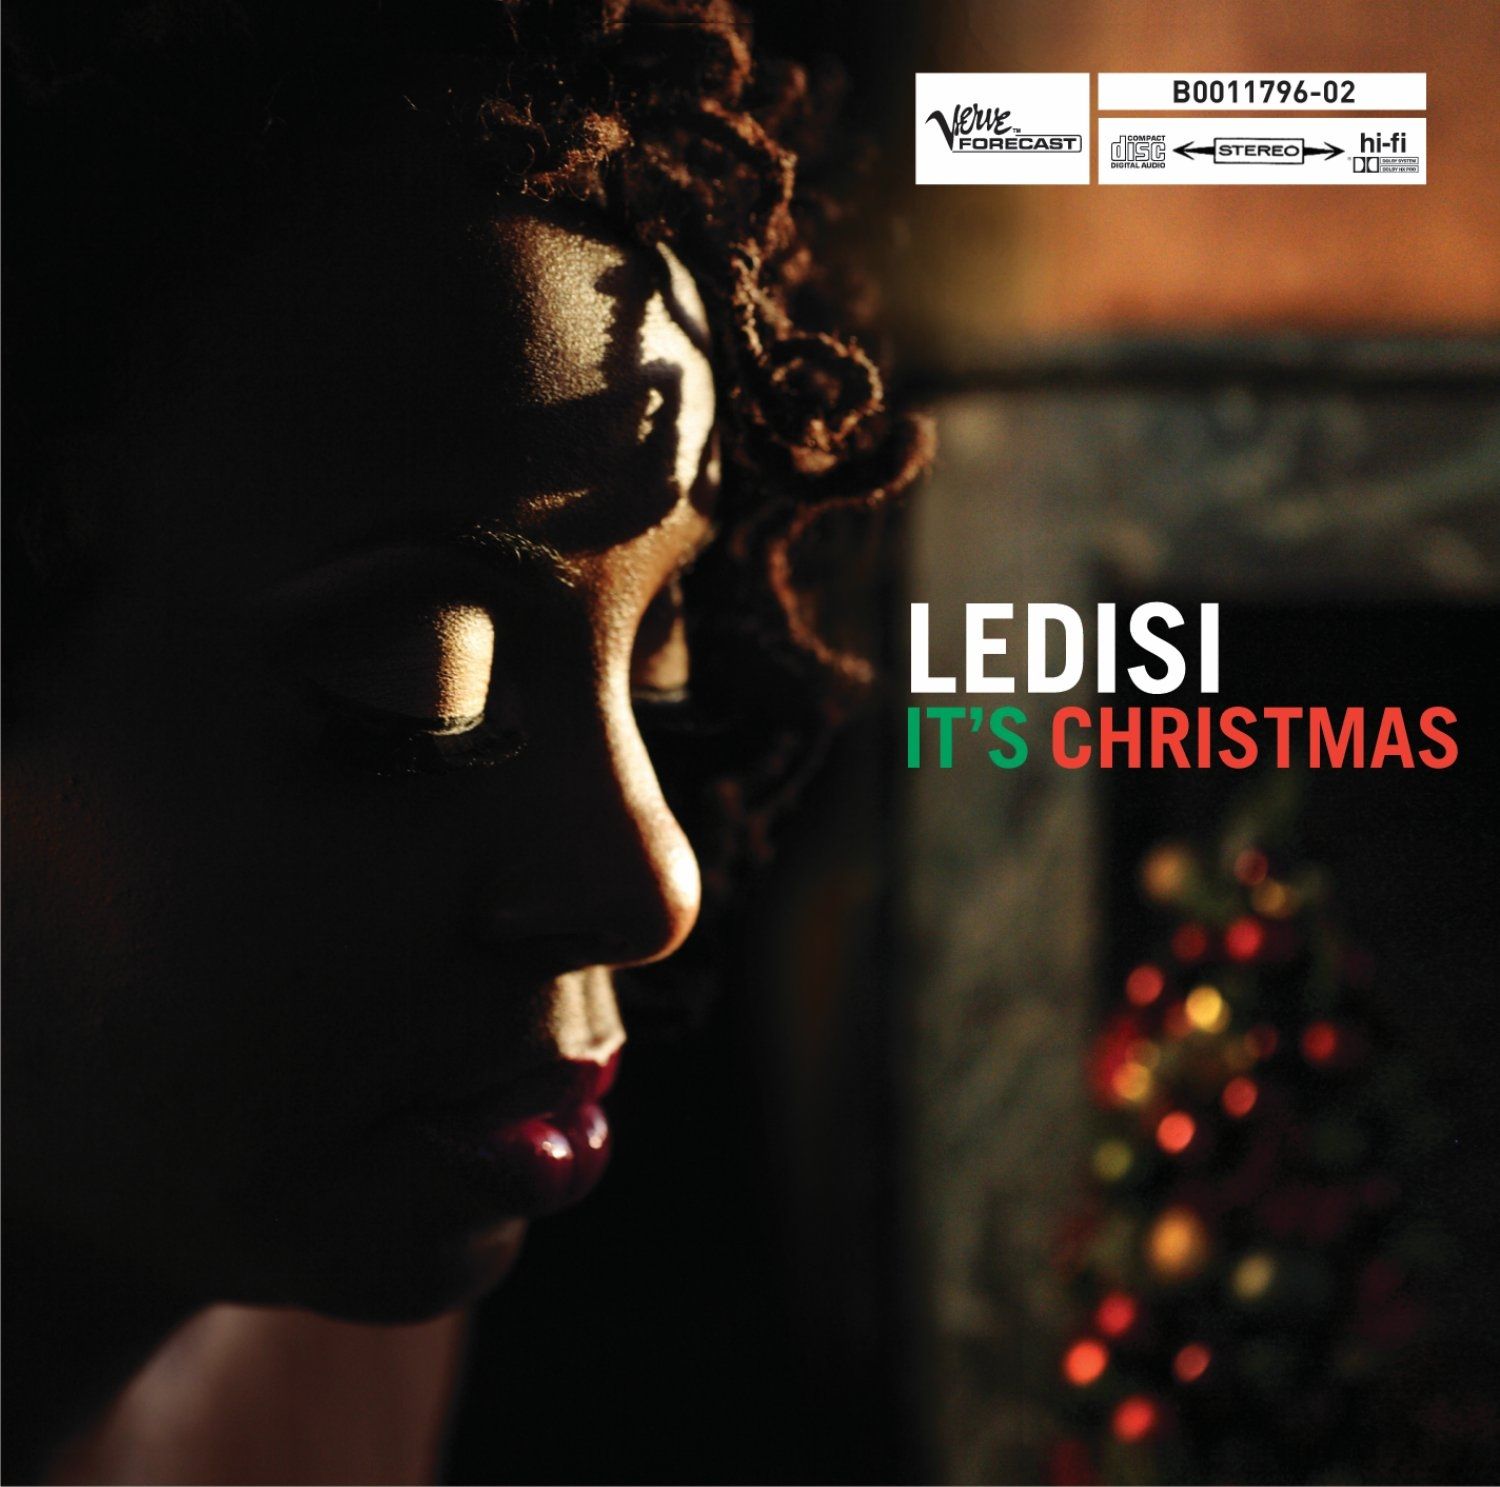 Imagem do álbum It's Christmas do(a) artista Ledisi